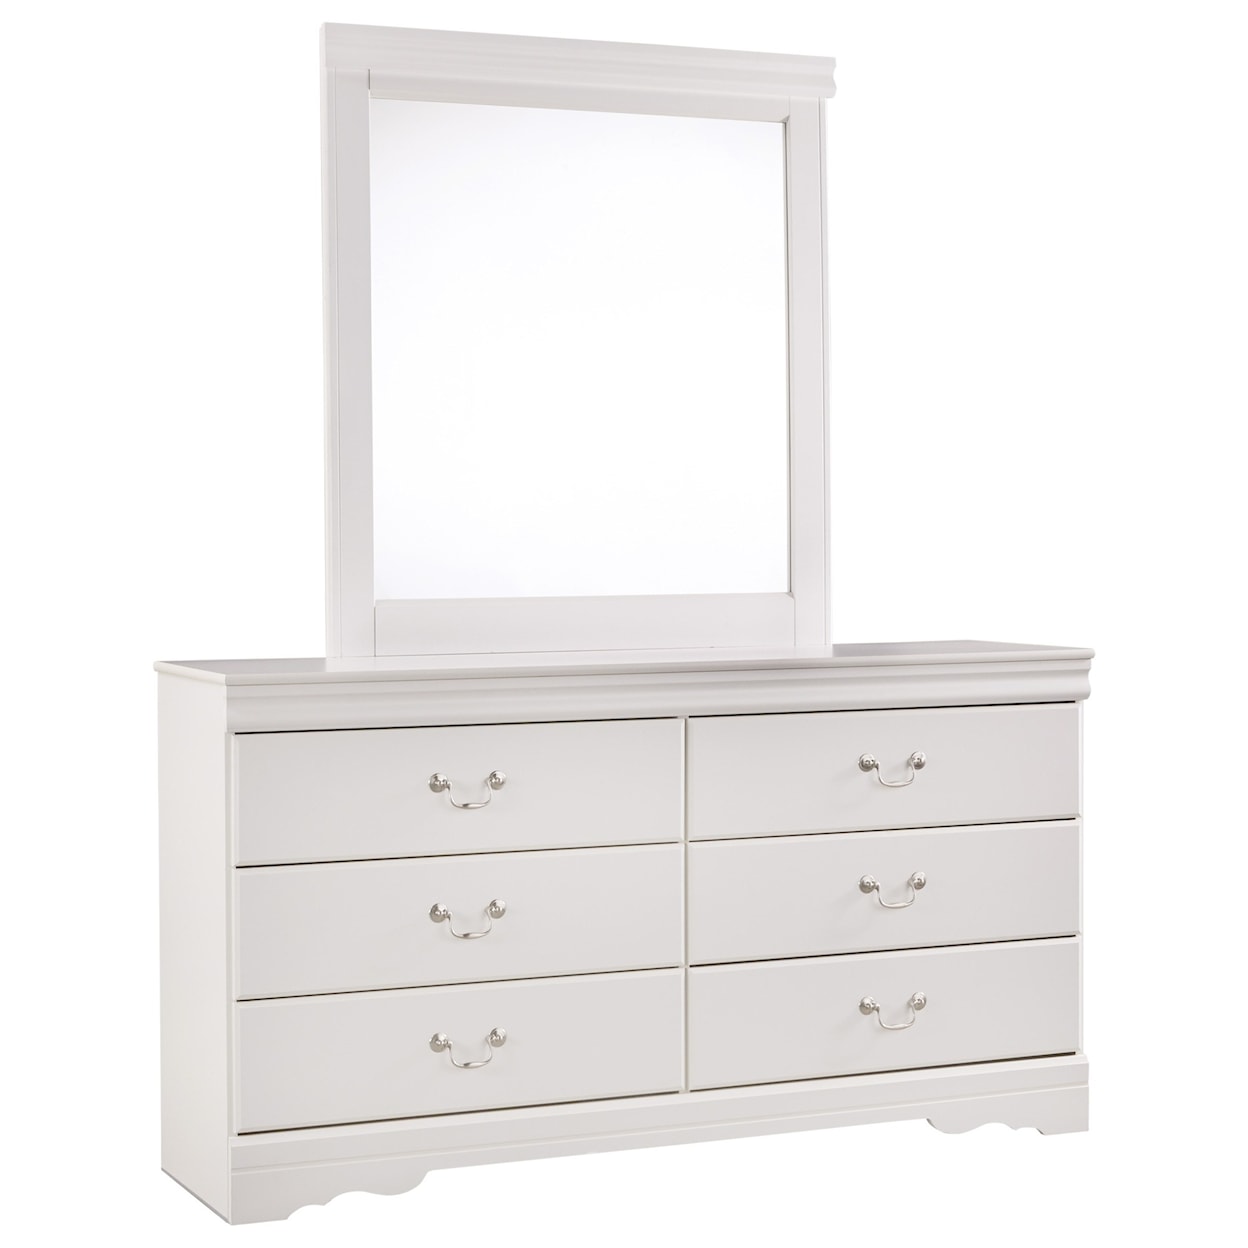 Ashley Furniture Signature Design Anarasia Dresser and Mirror Combination